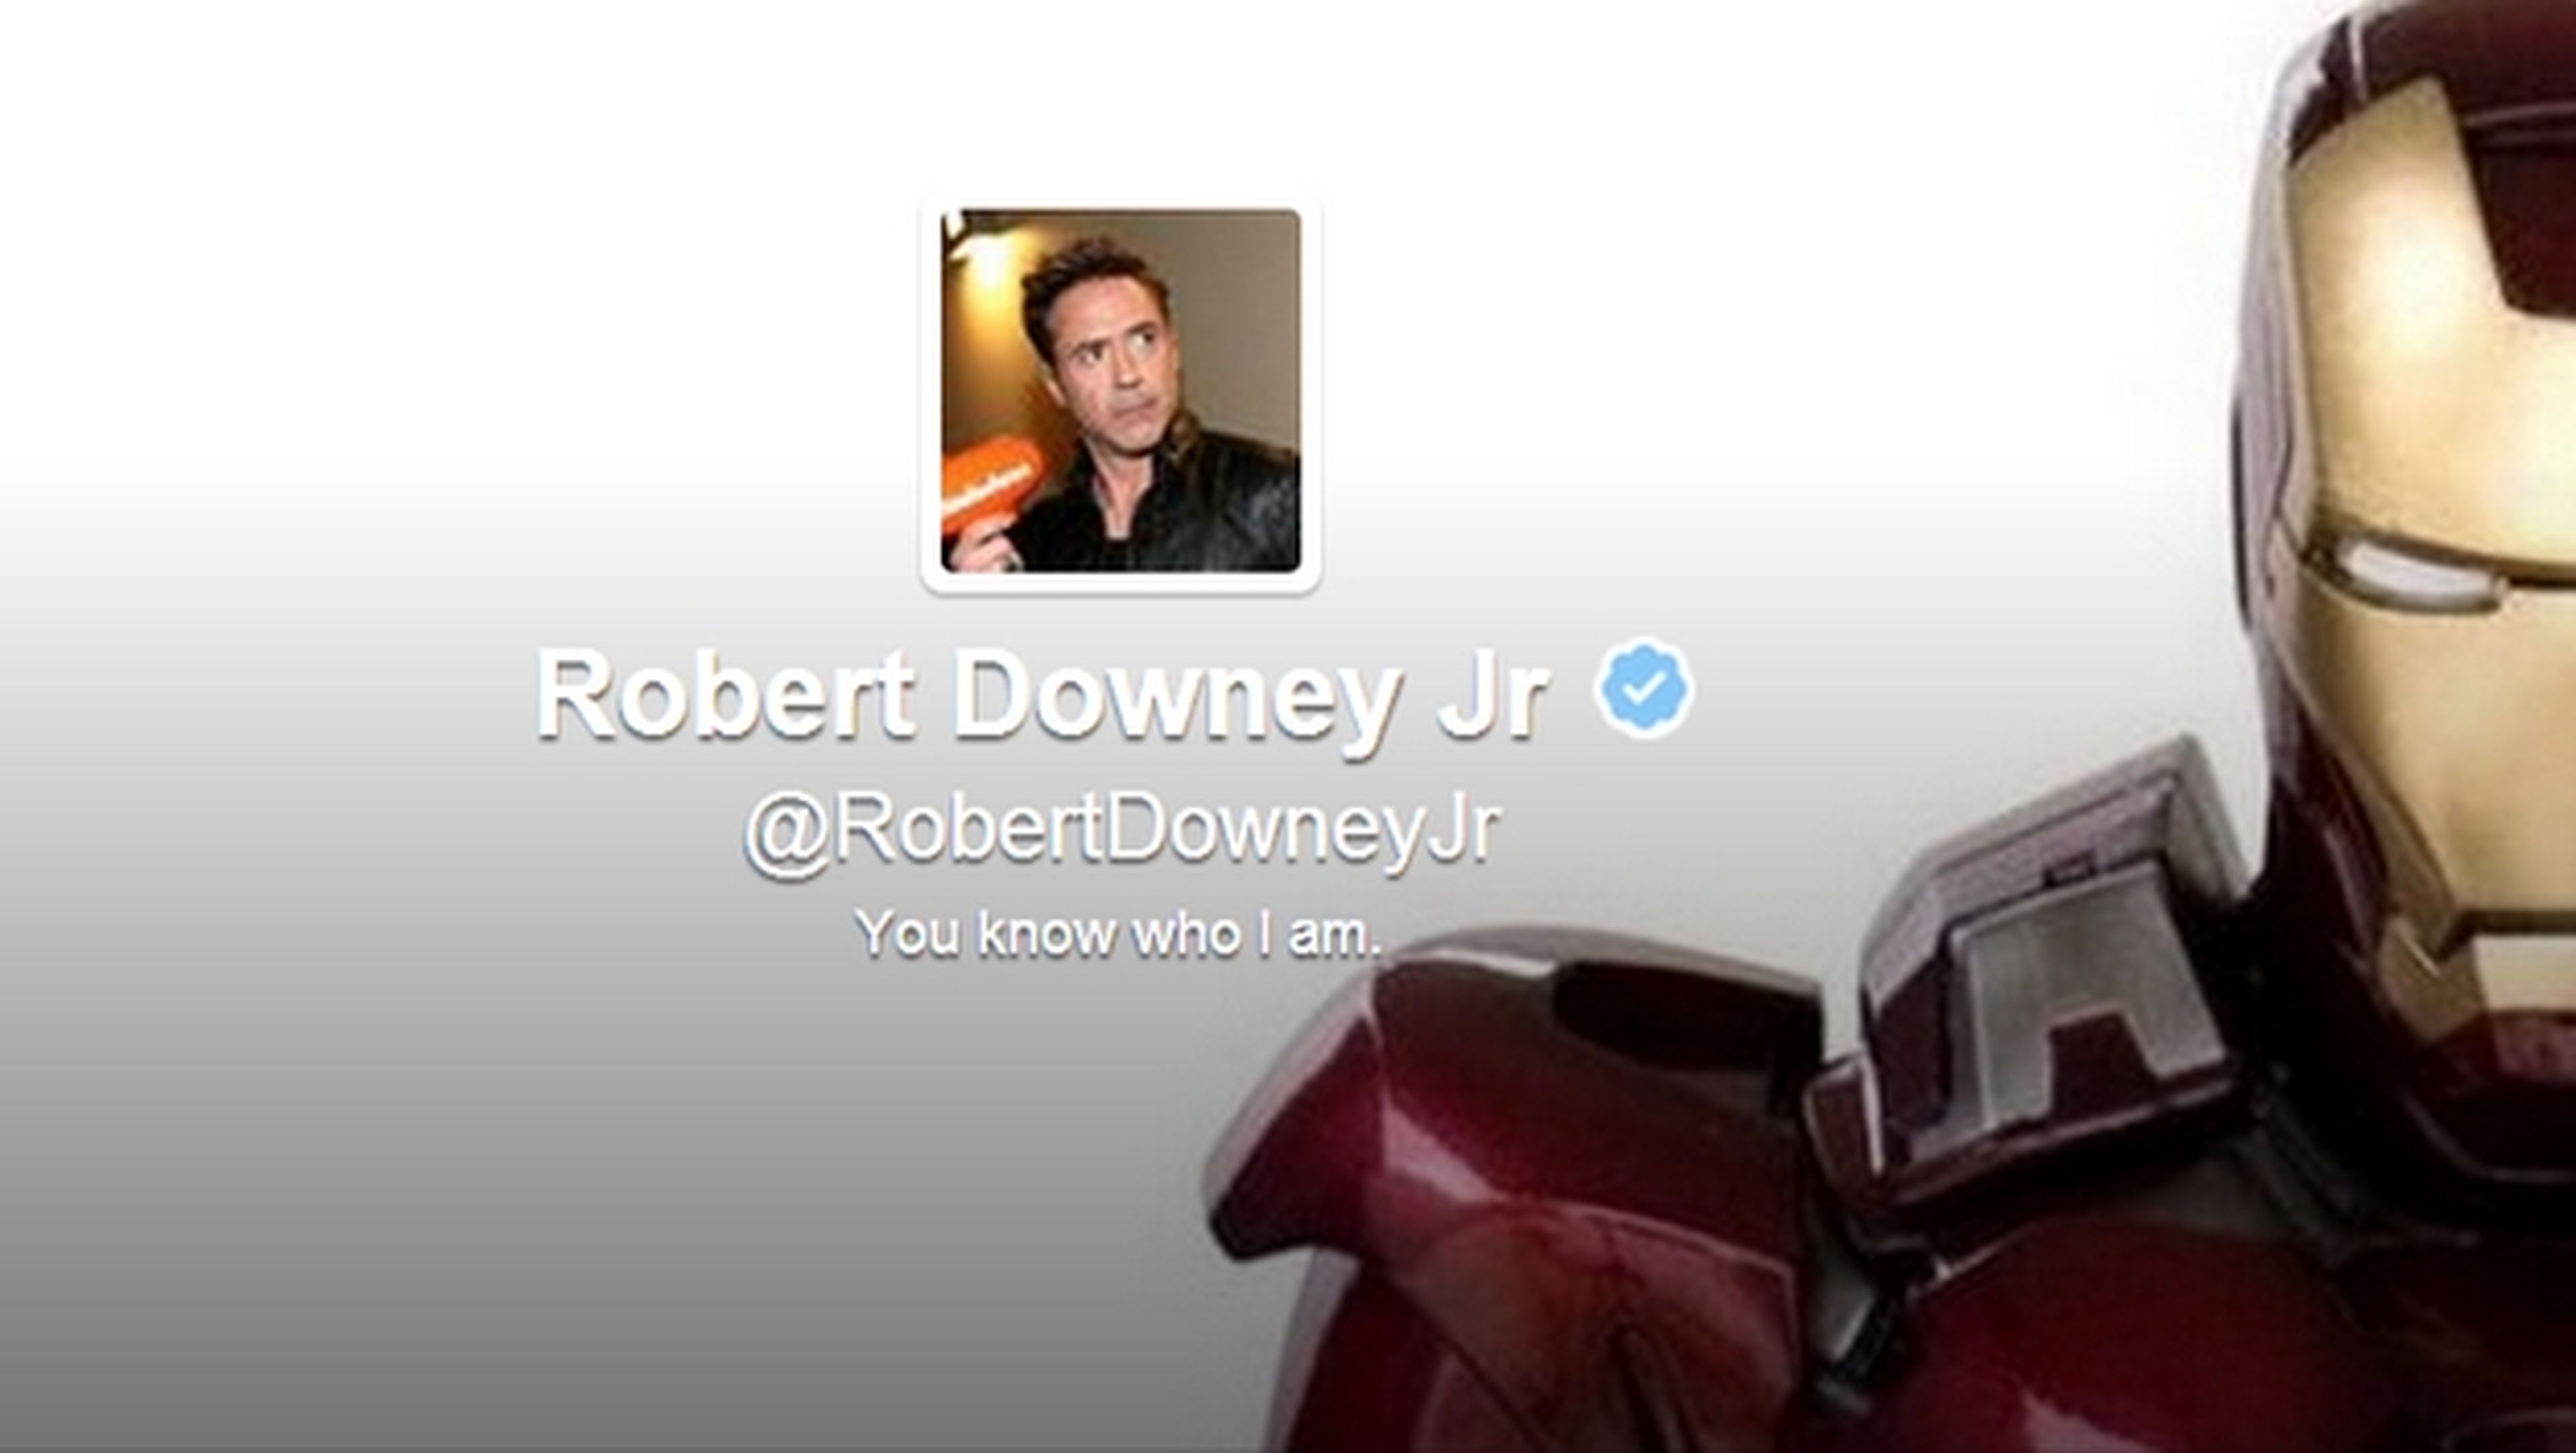 Robert Downey Jr, el mismísimo Ironman, acaba de estrenarse en Twitter. En 23 horas ha conseguido un millón de seguidores.